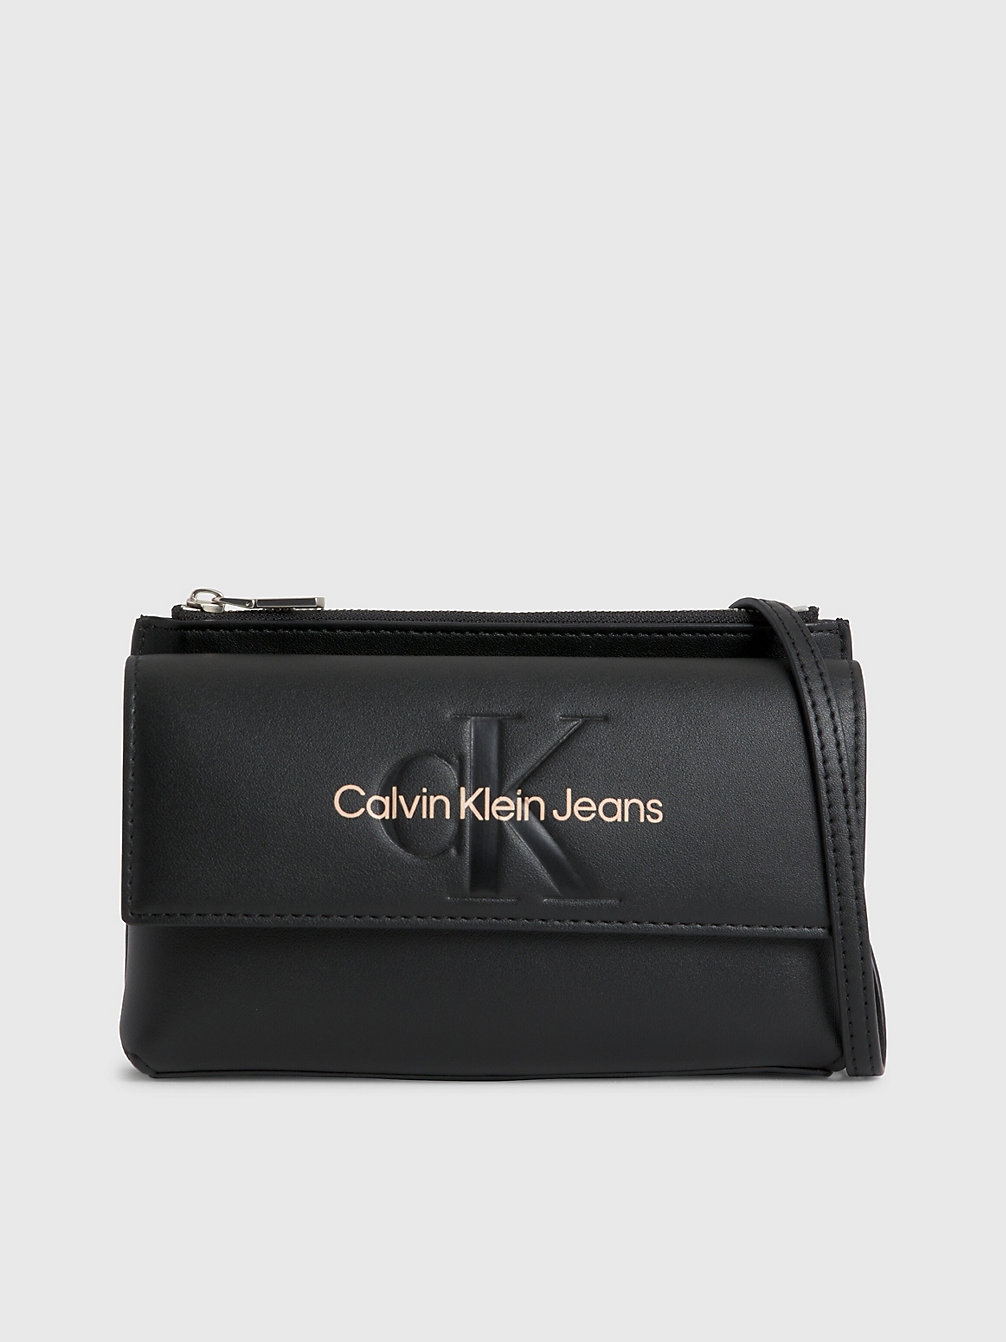 BLACK WITH ROSE Crossbody Bag undefined women Calvin Klein